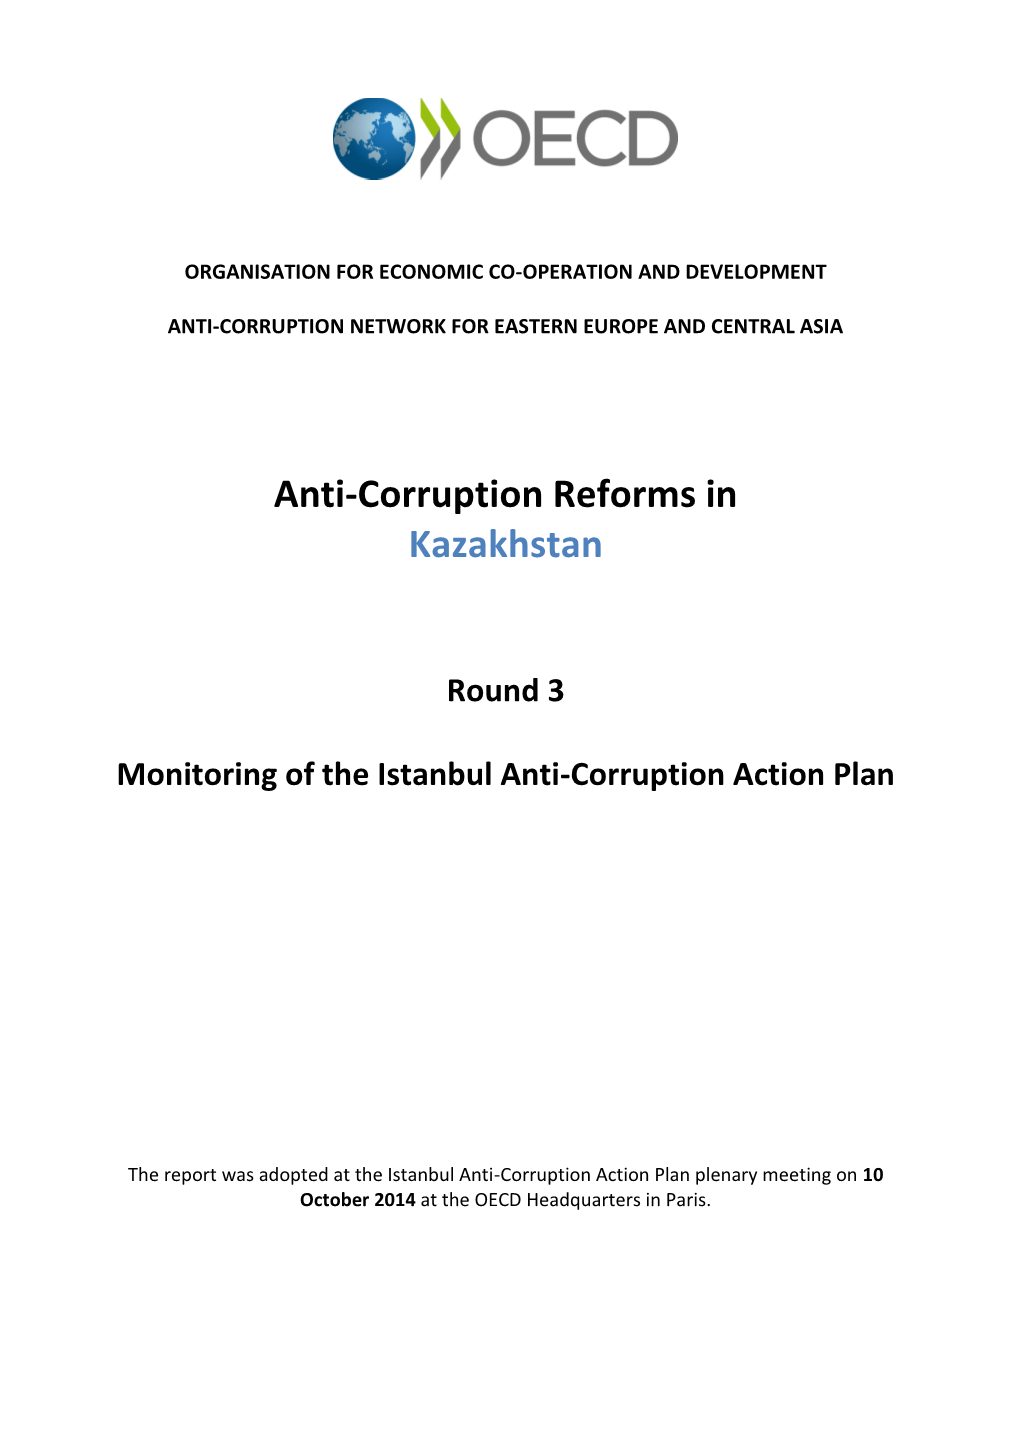 Anti-Corruption Reforms in Kazakhstan